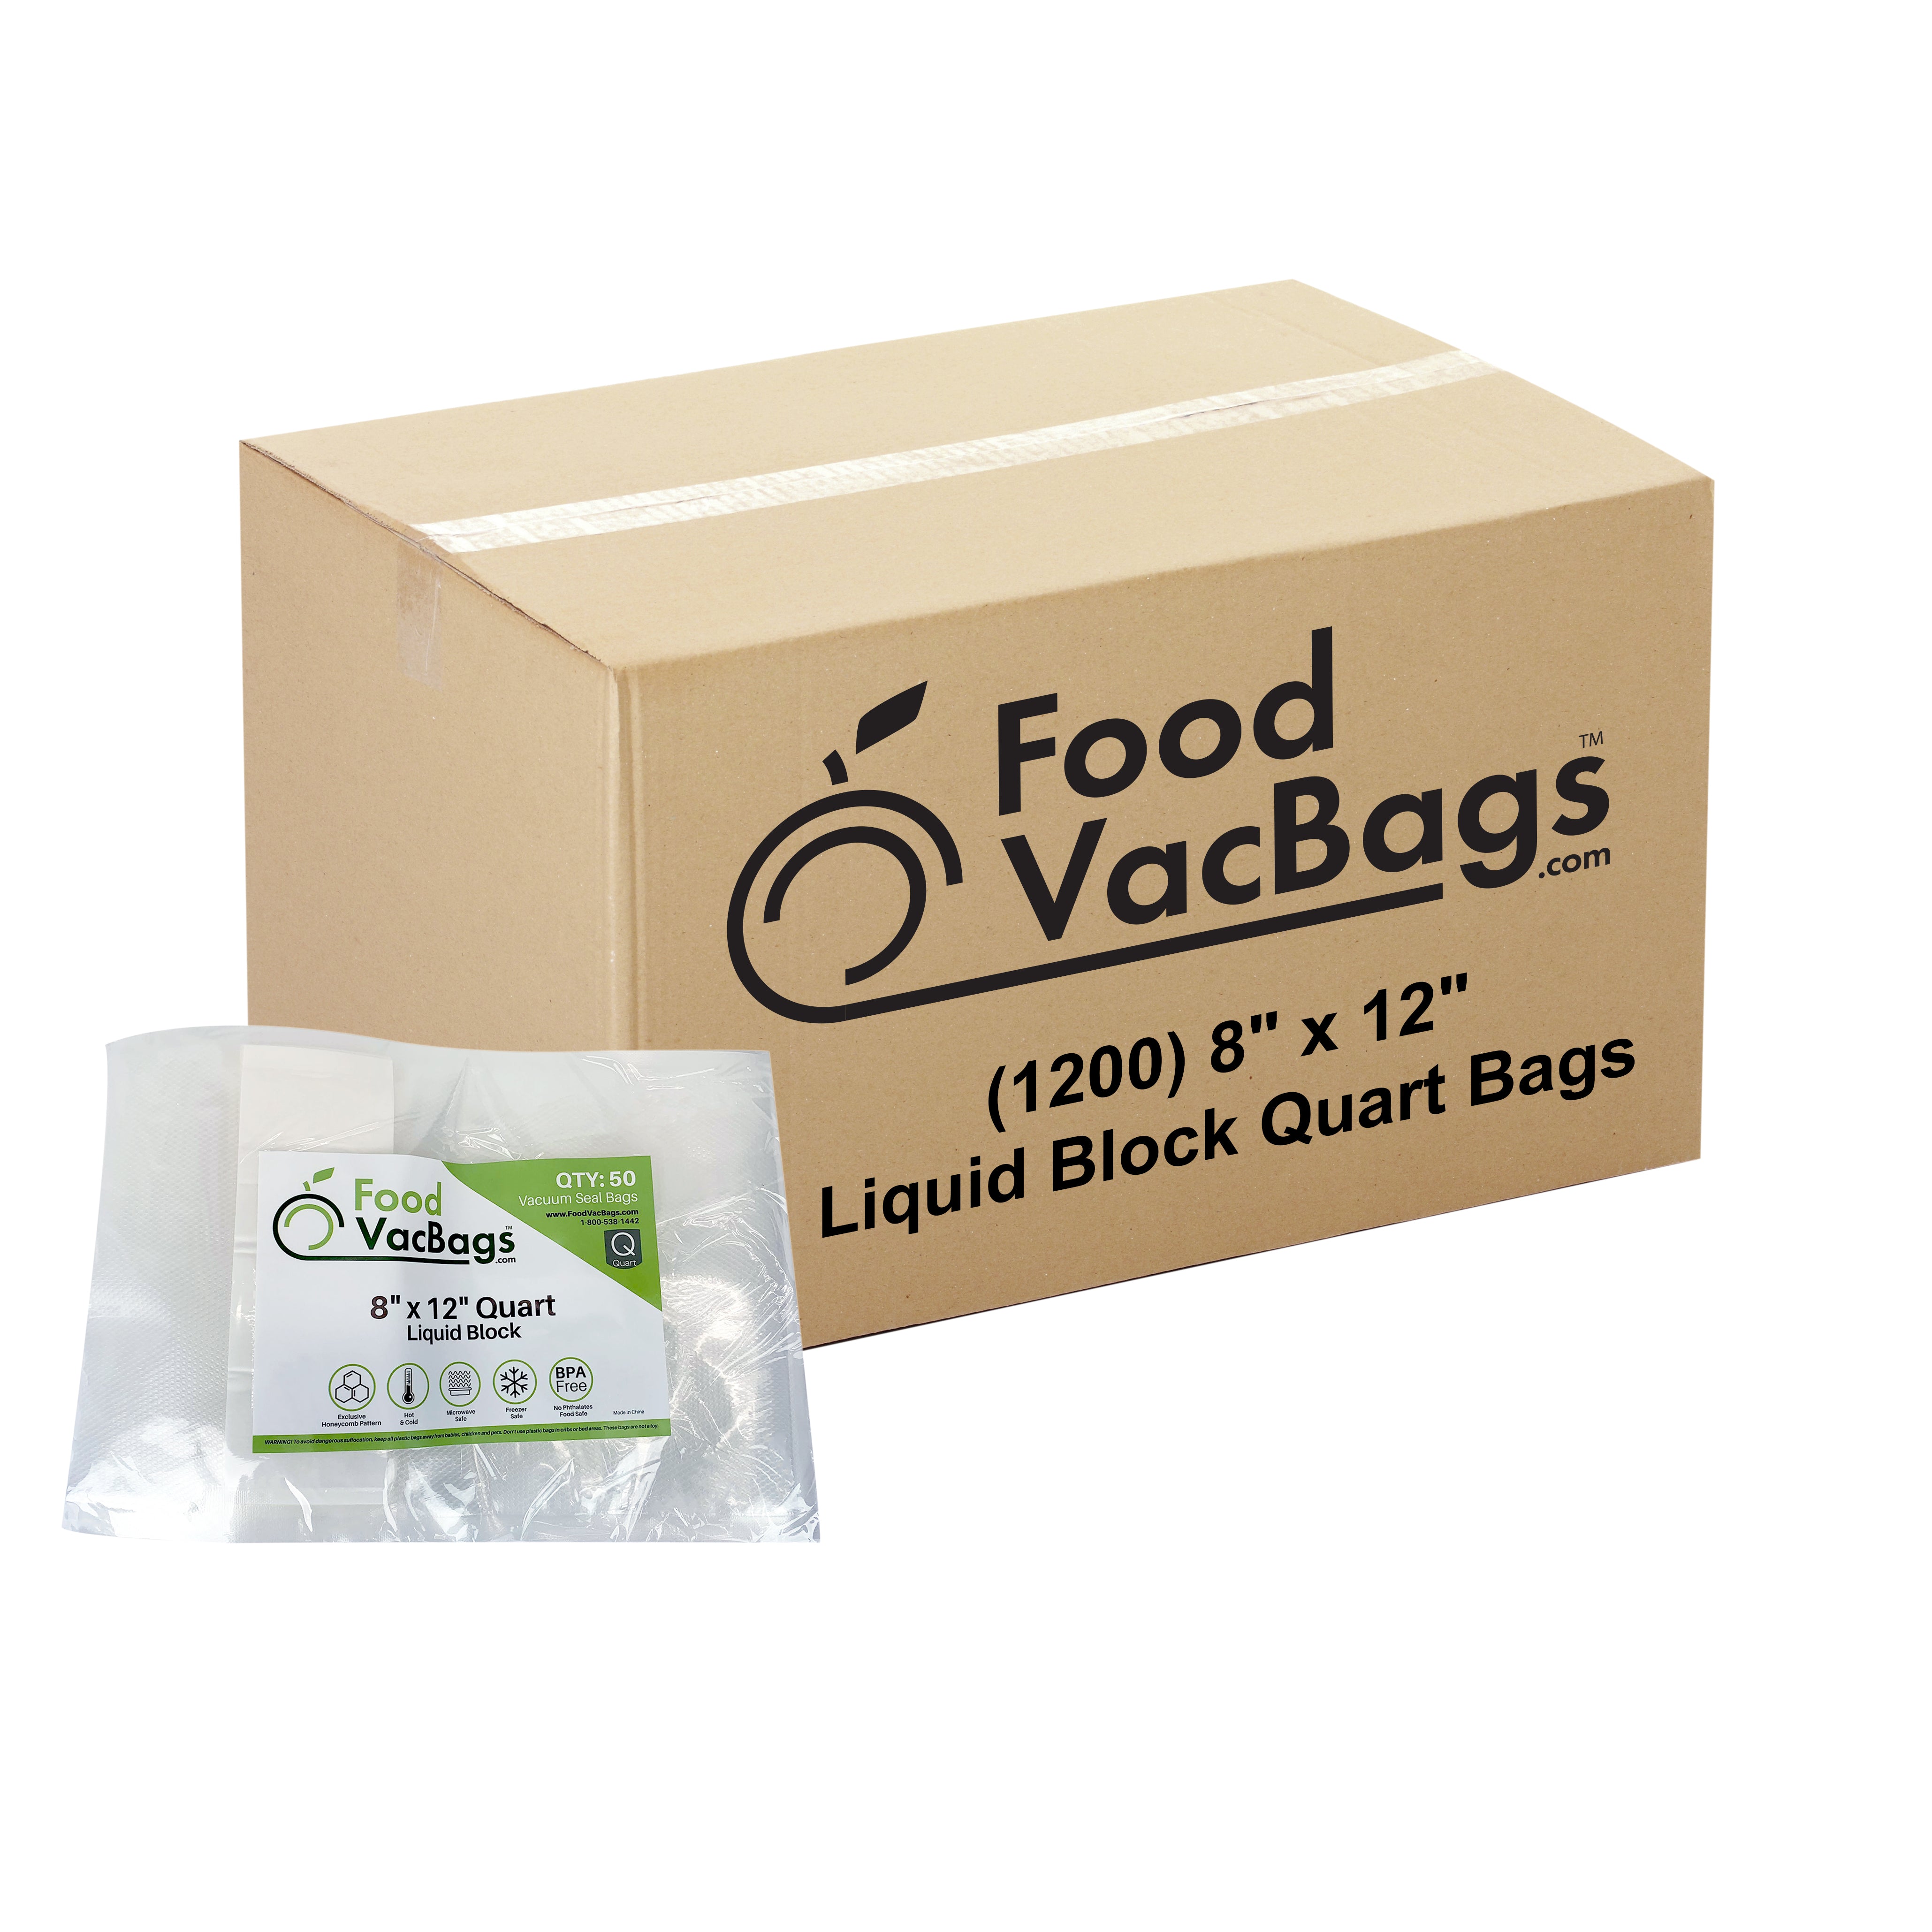 1200 - 8 X 12 Liquid Block Quart Bags